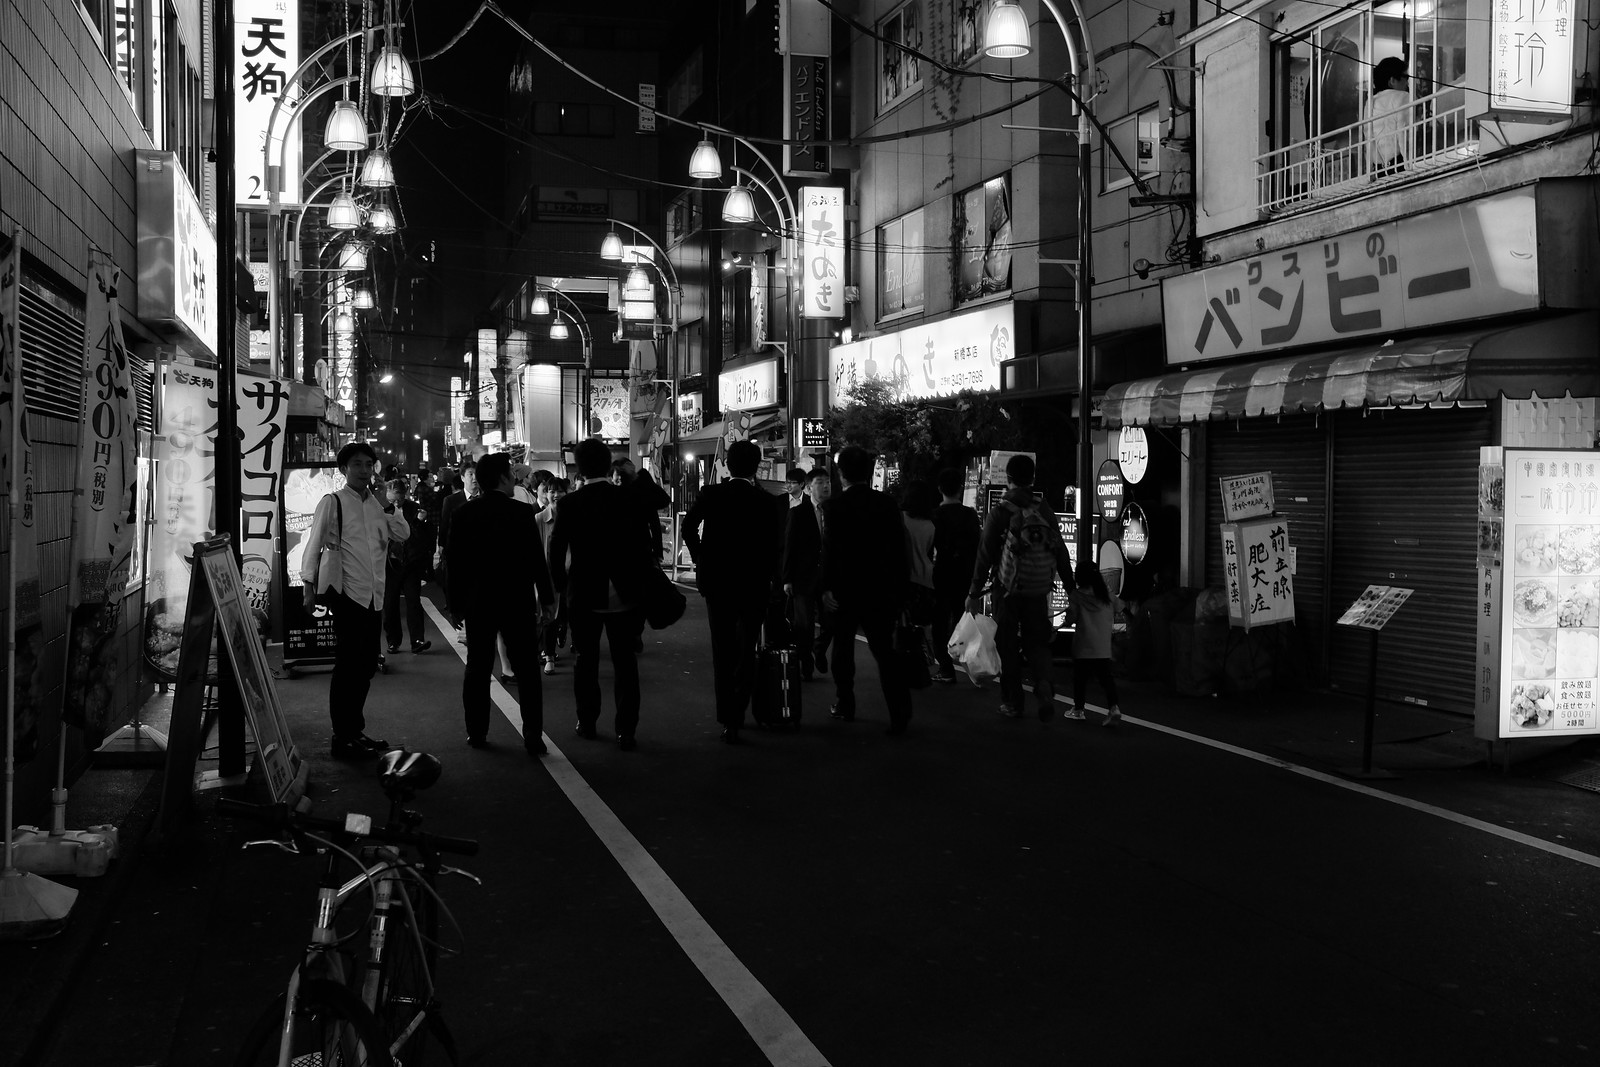 The night Shinbashi in Tokyo, Japan.